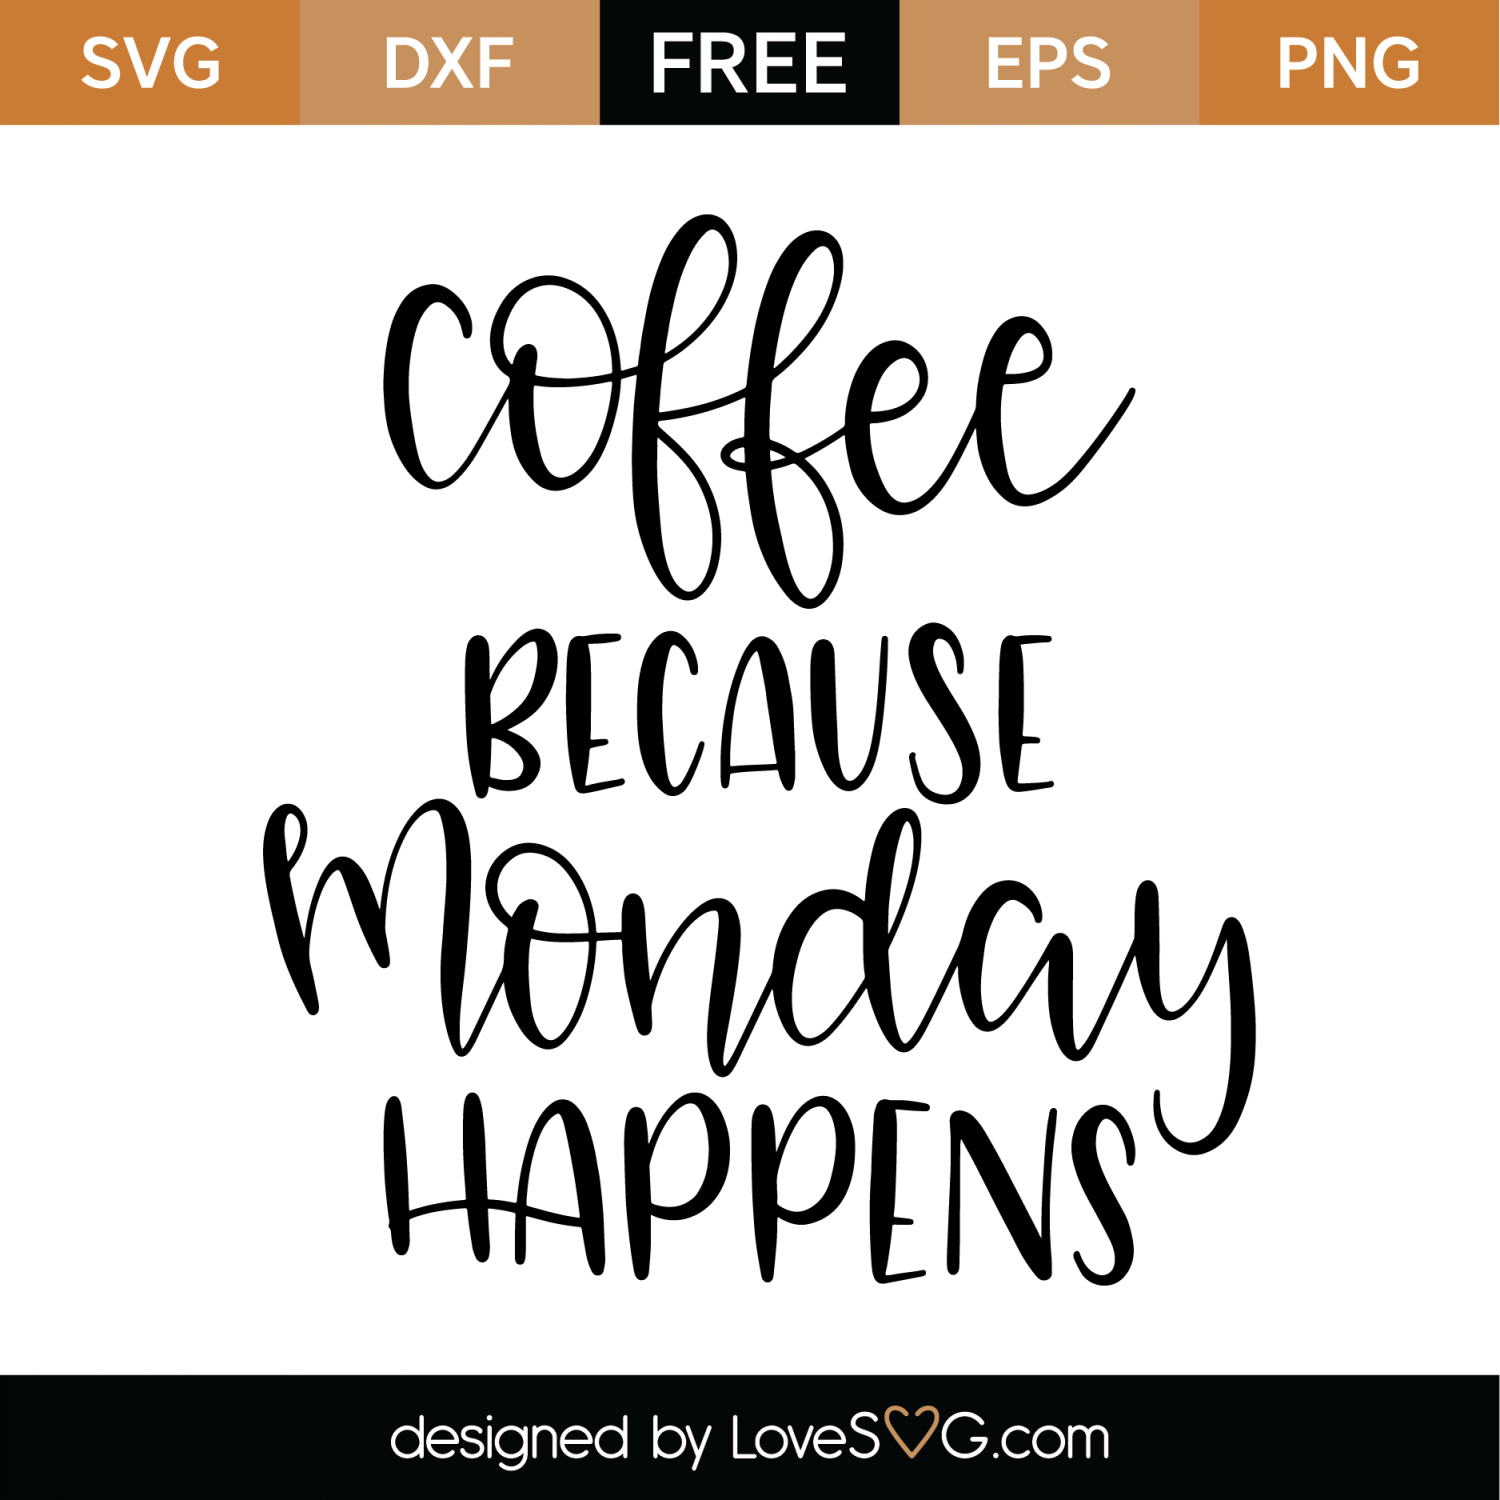 Download Free Coffee Because Monday Happens SVG Cut File | Lovesvg.com